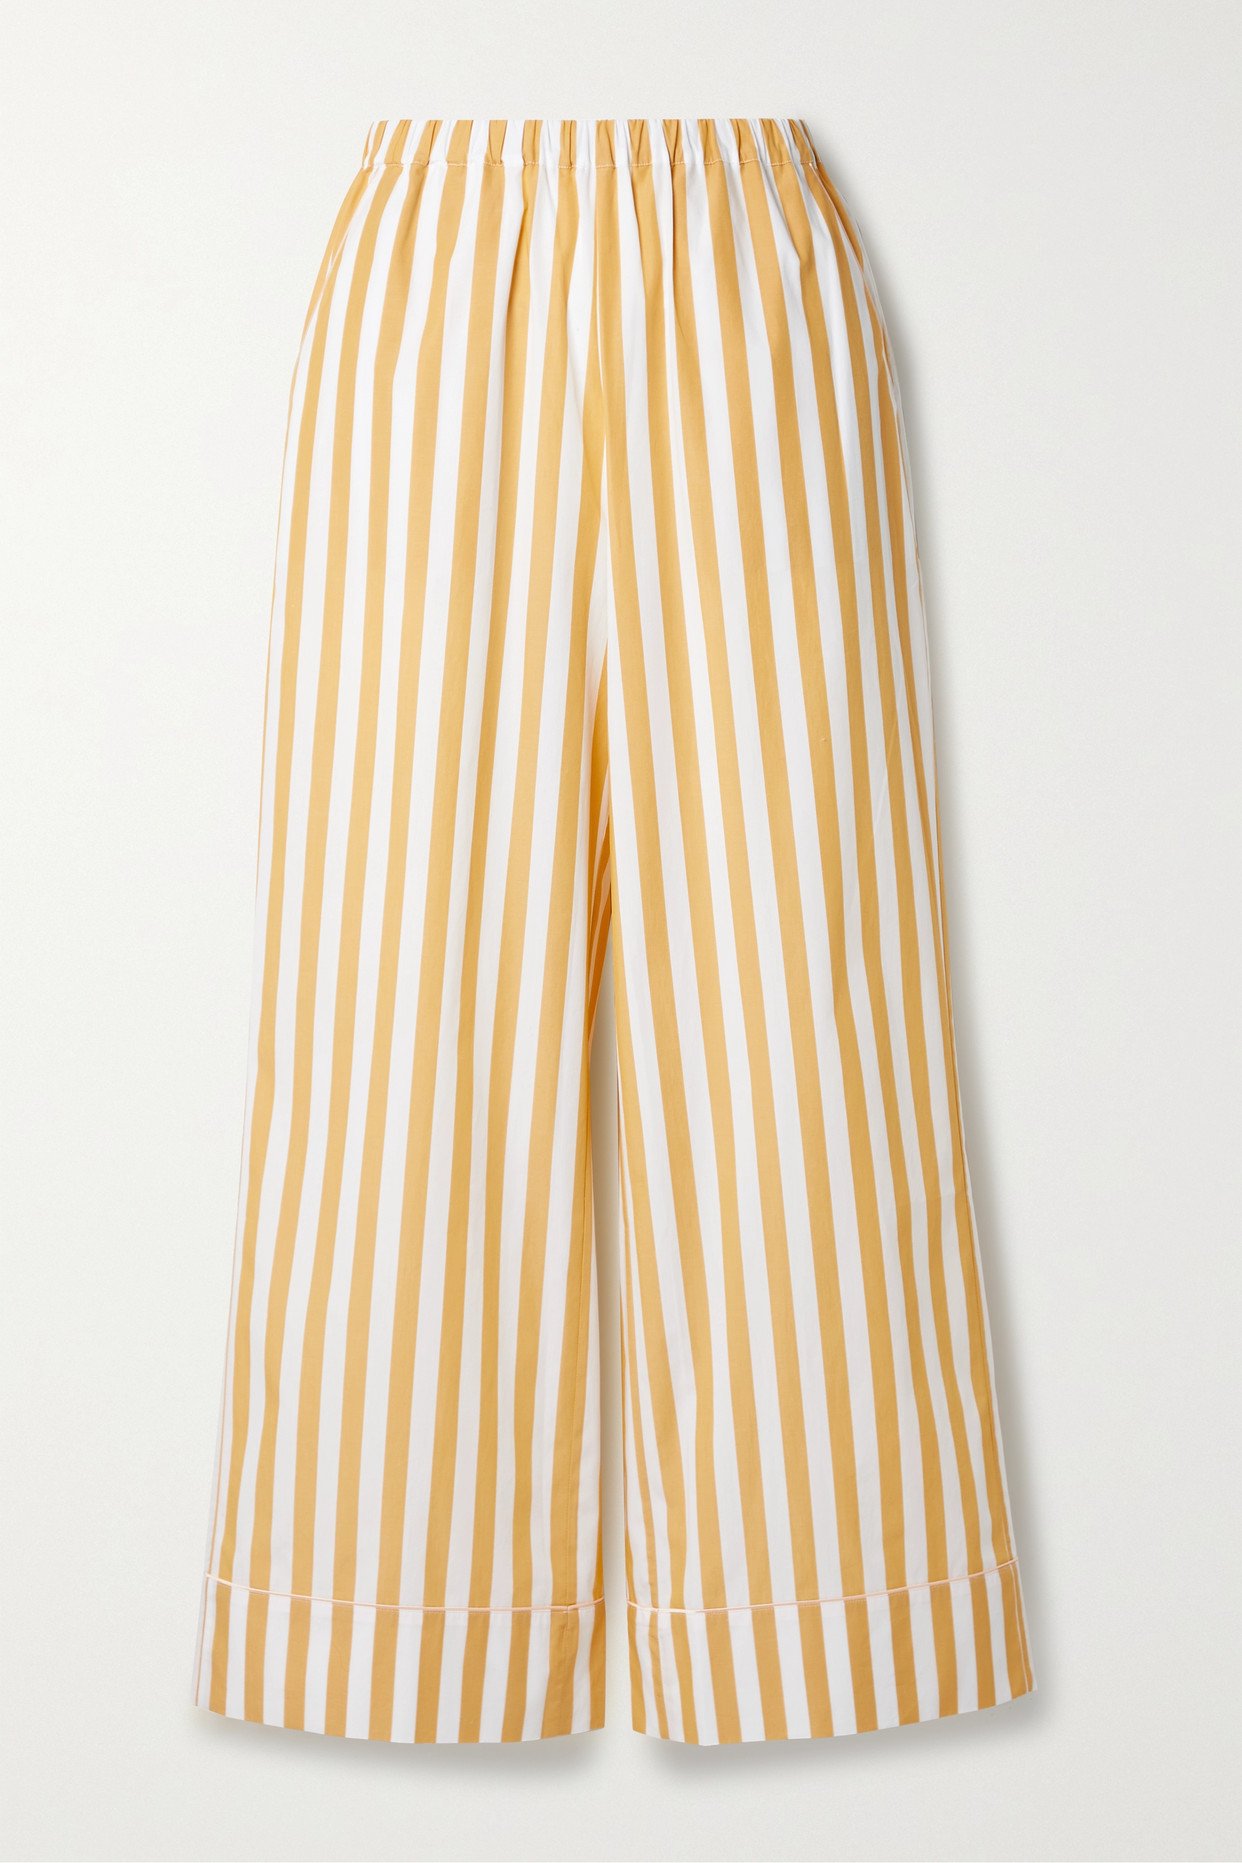 Striped cotton-poplin pajama pants